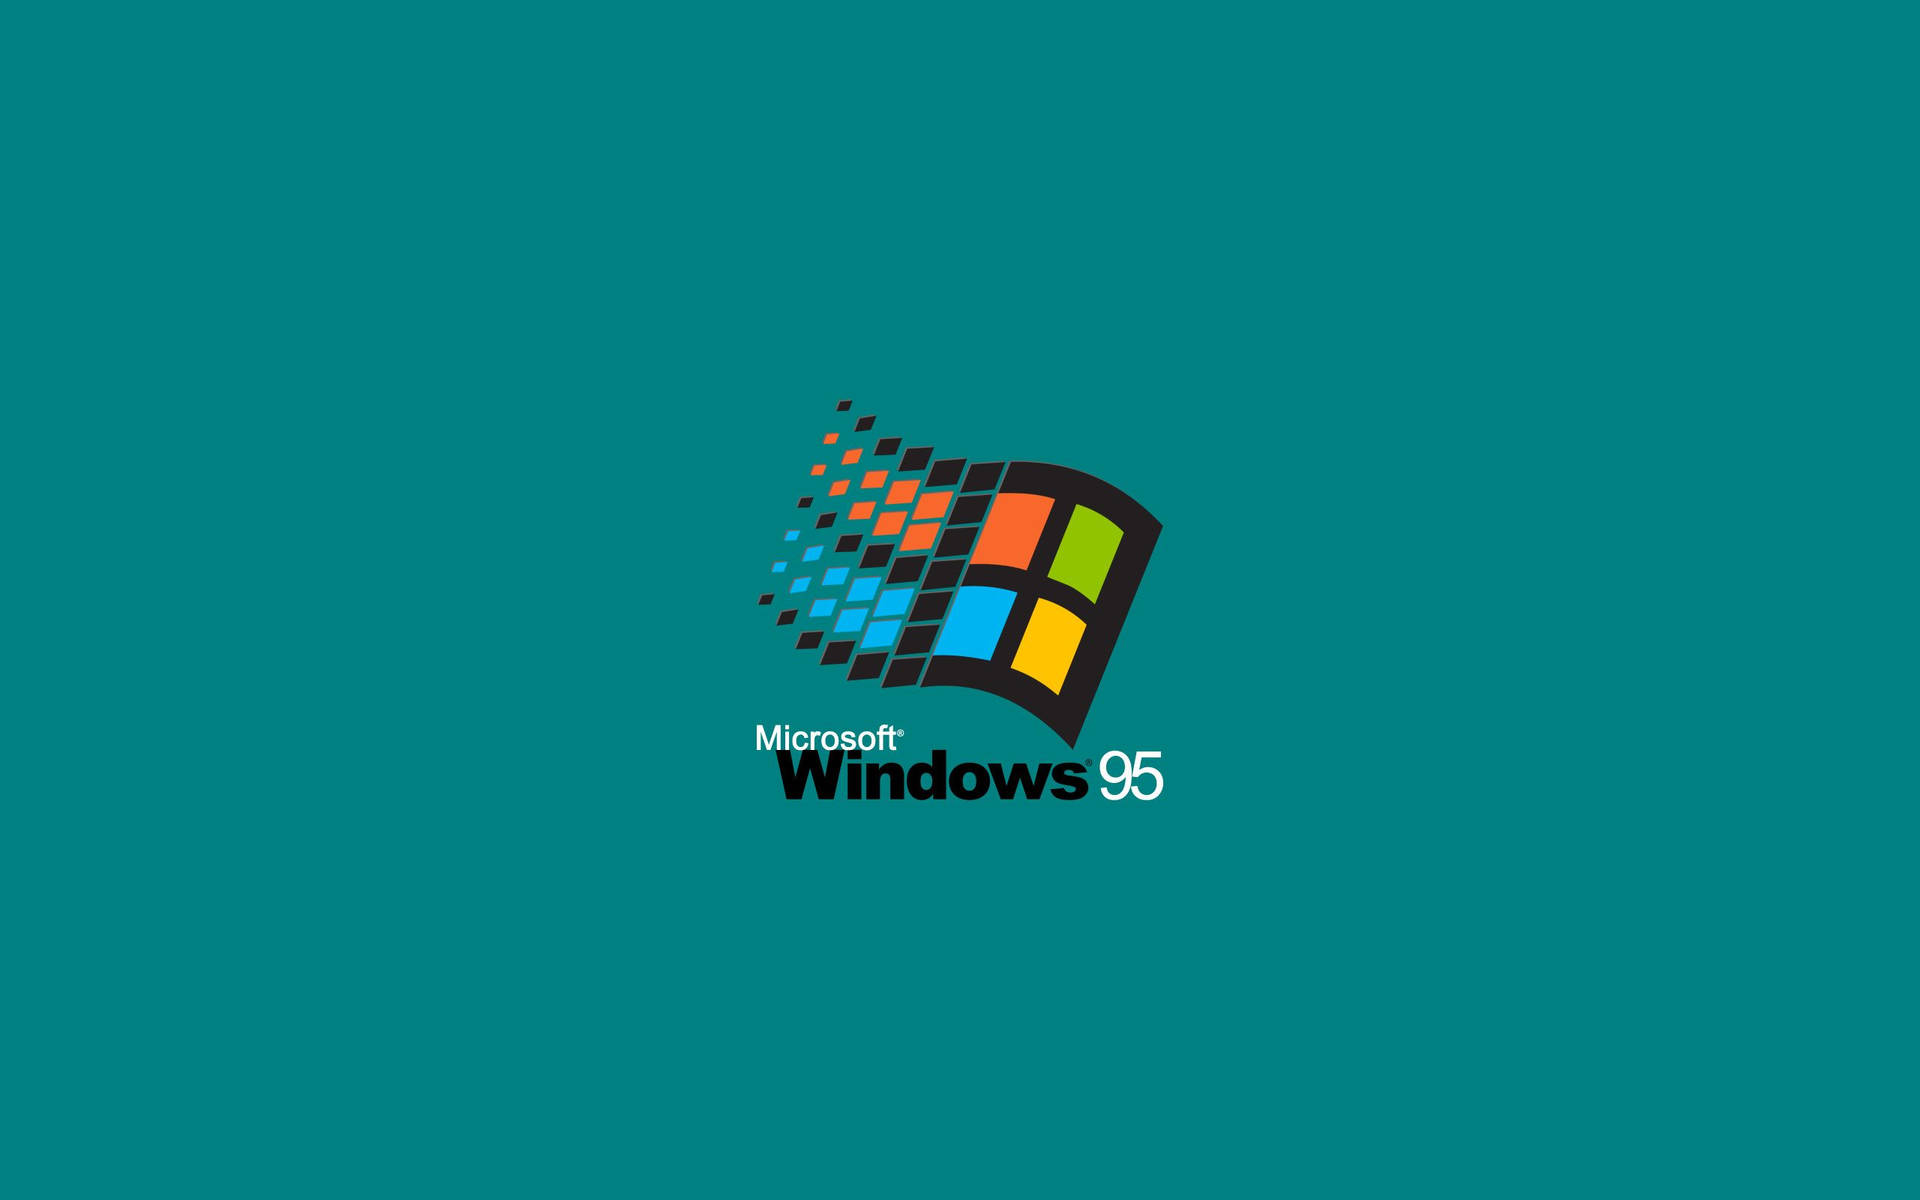 Windows Logo On A Green Background Wallpaper